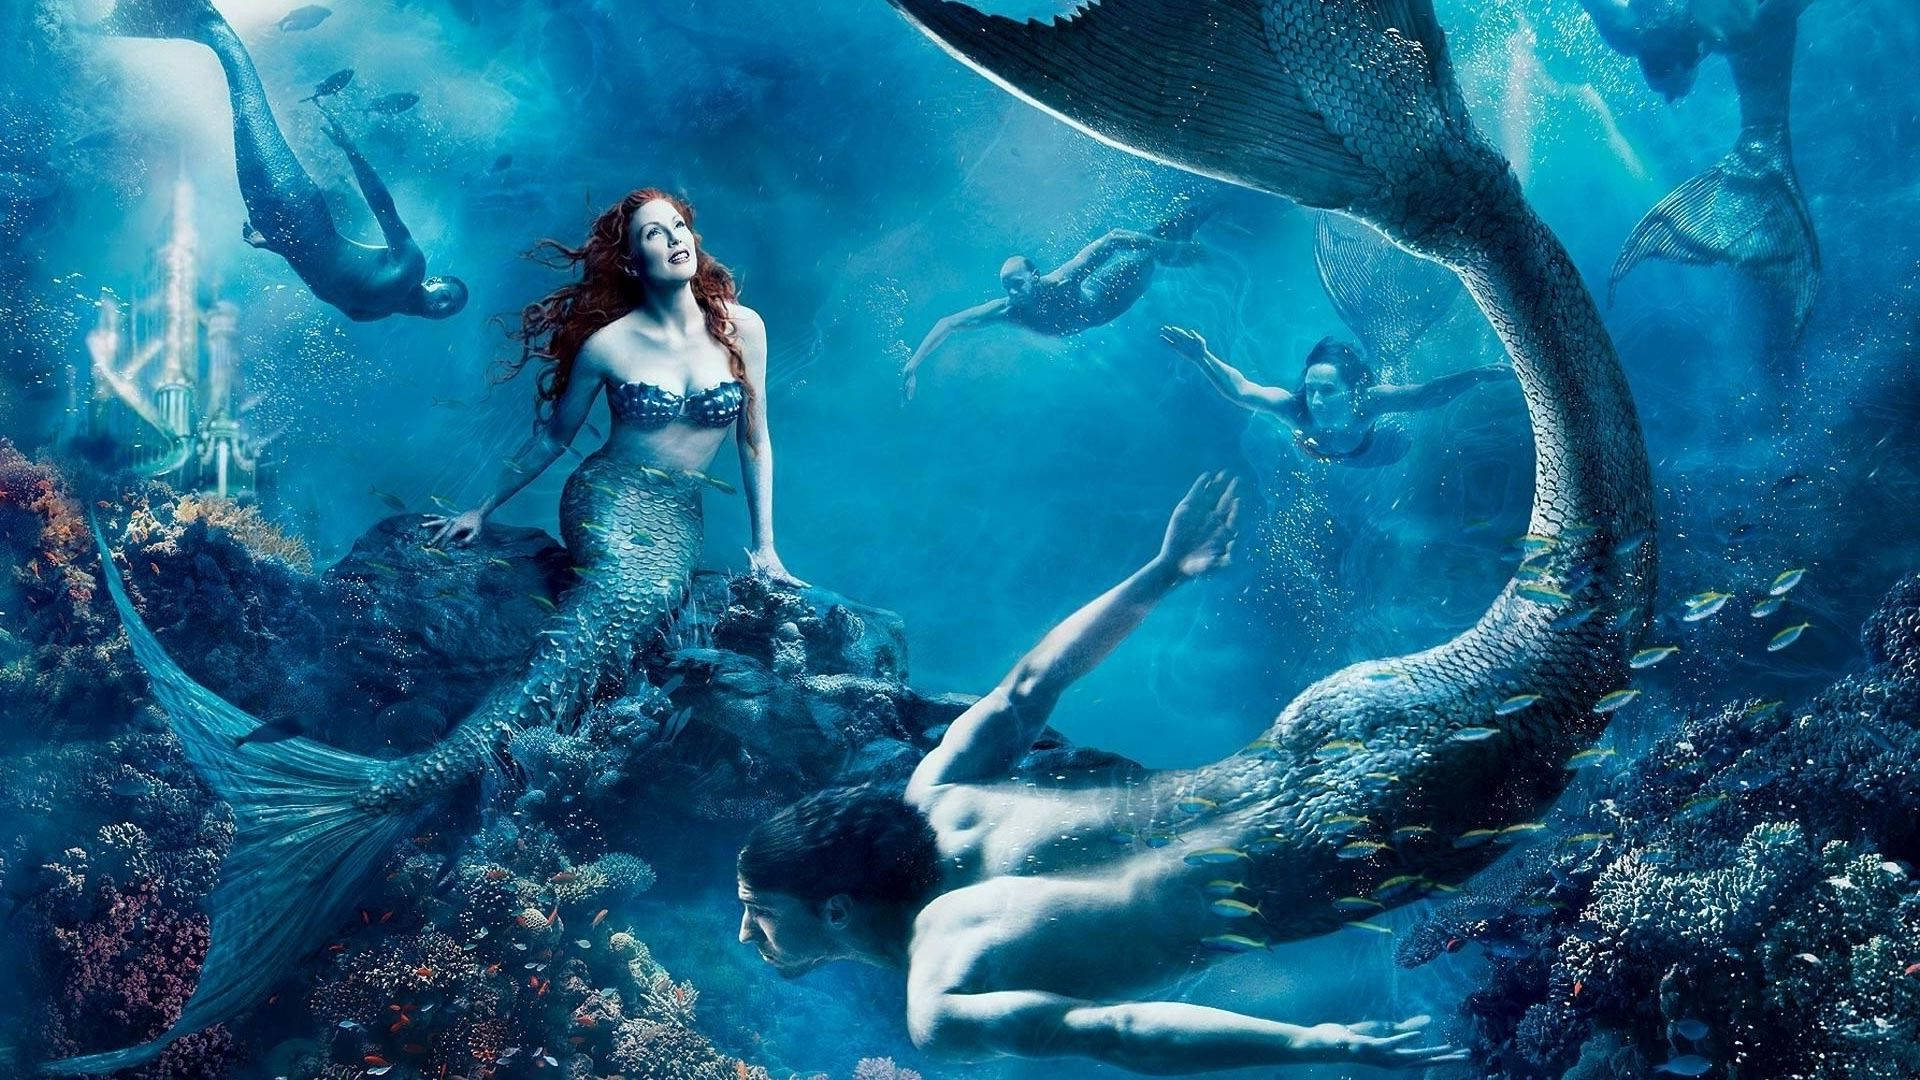 Group of happy mermaids swimming underwater Wallpaper